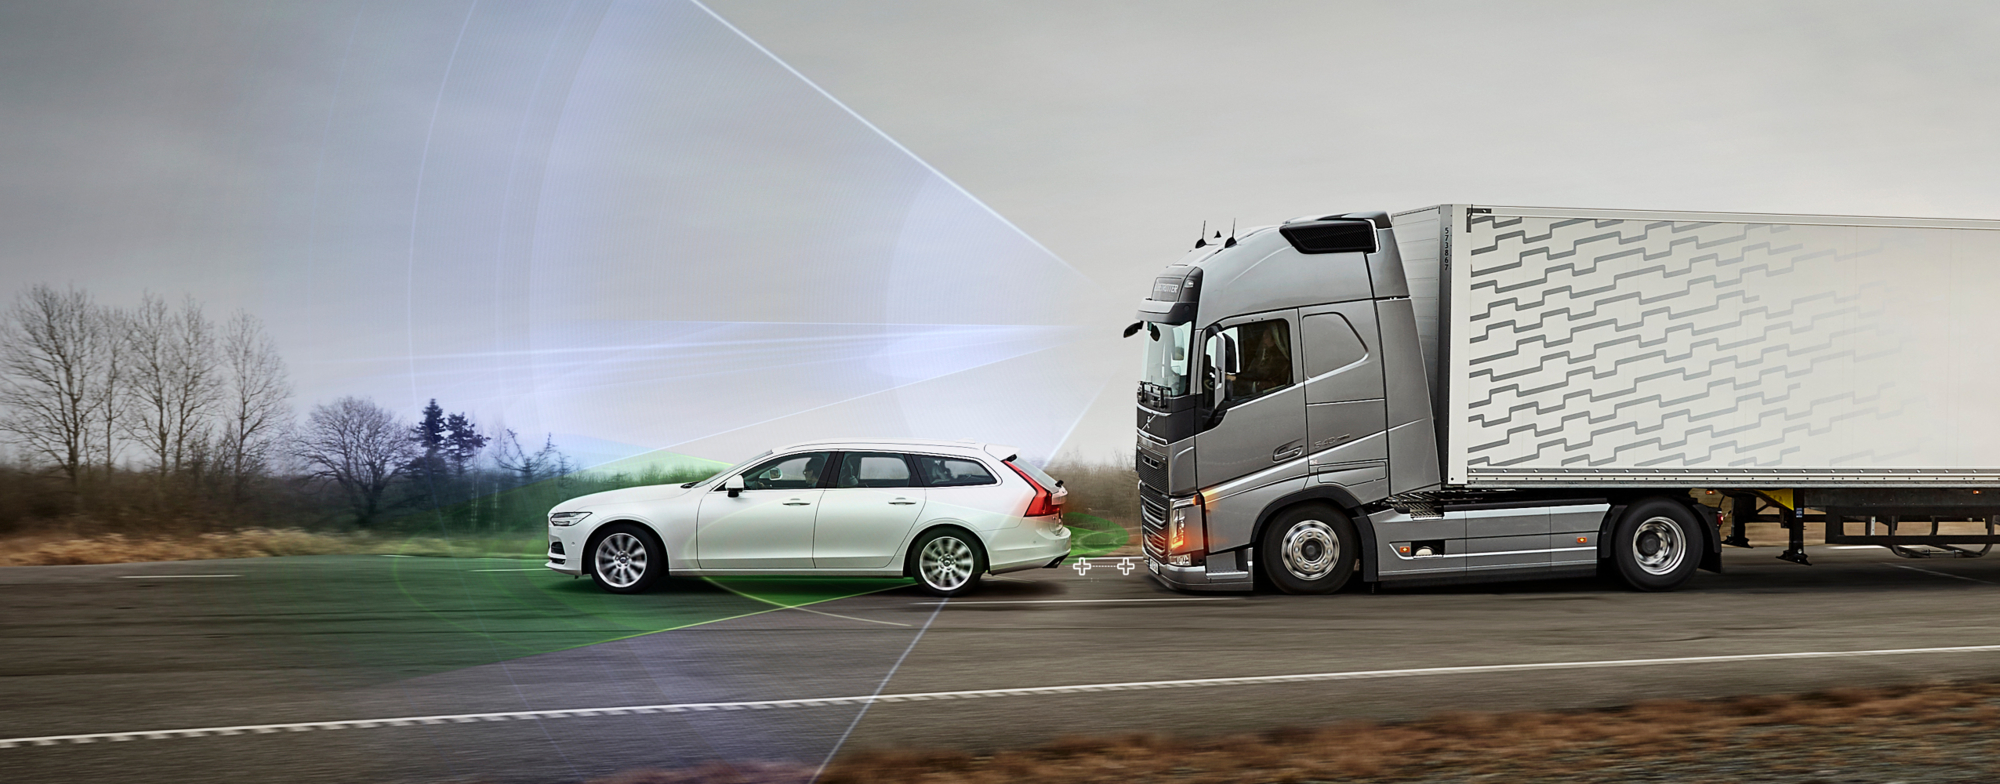 volvo-trucks-intelligente-veiligheidssystemen-2560x1000.jpg